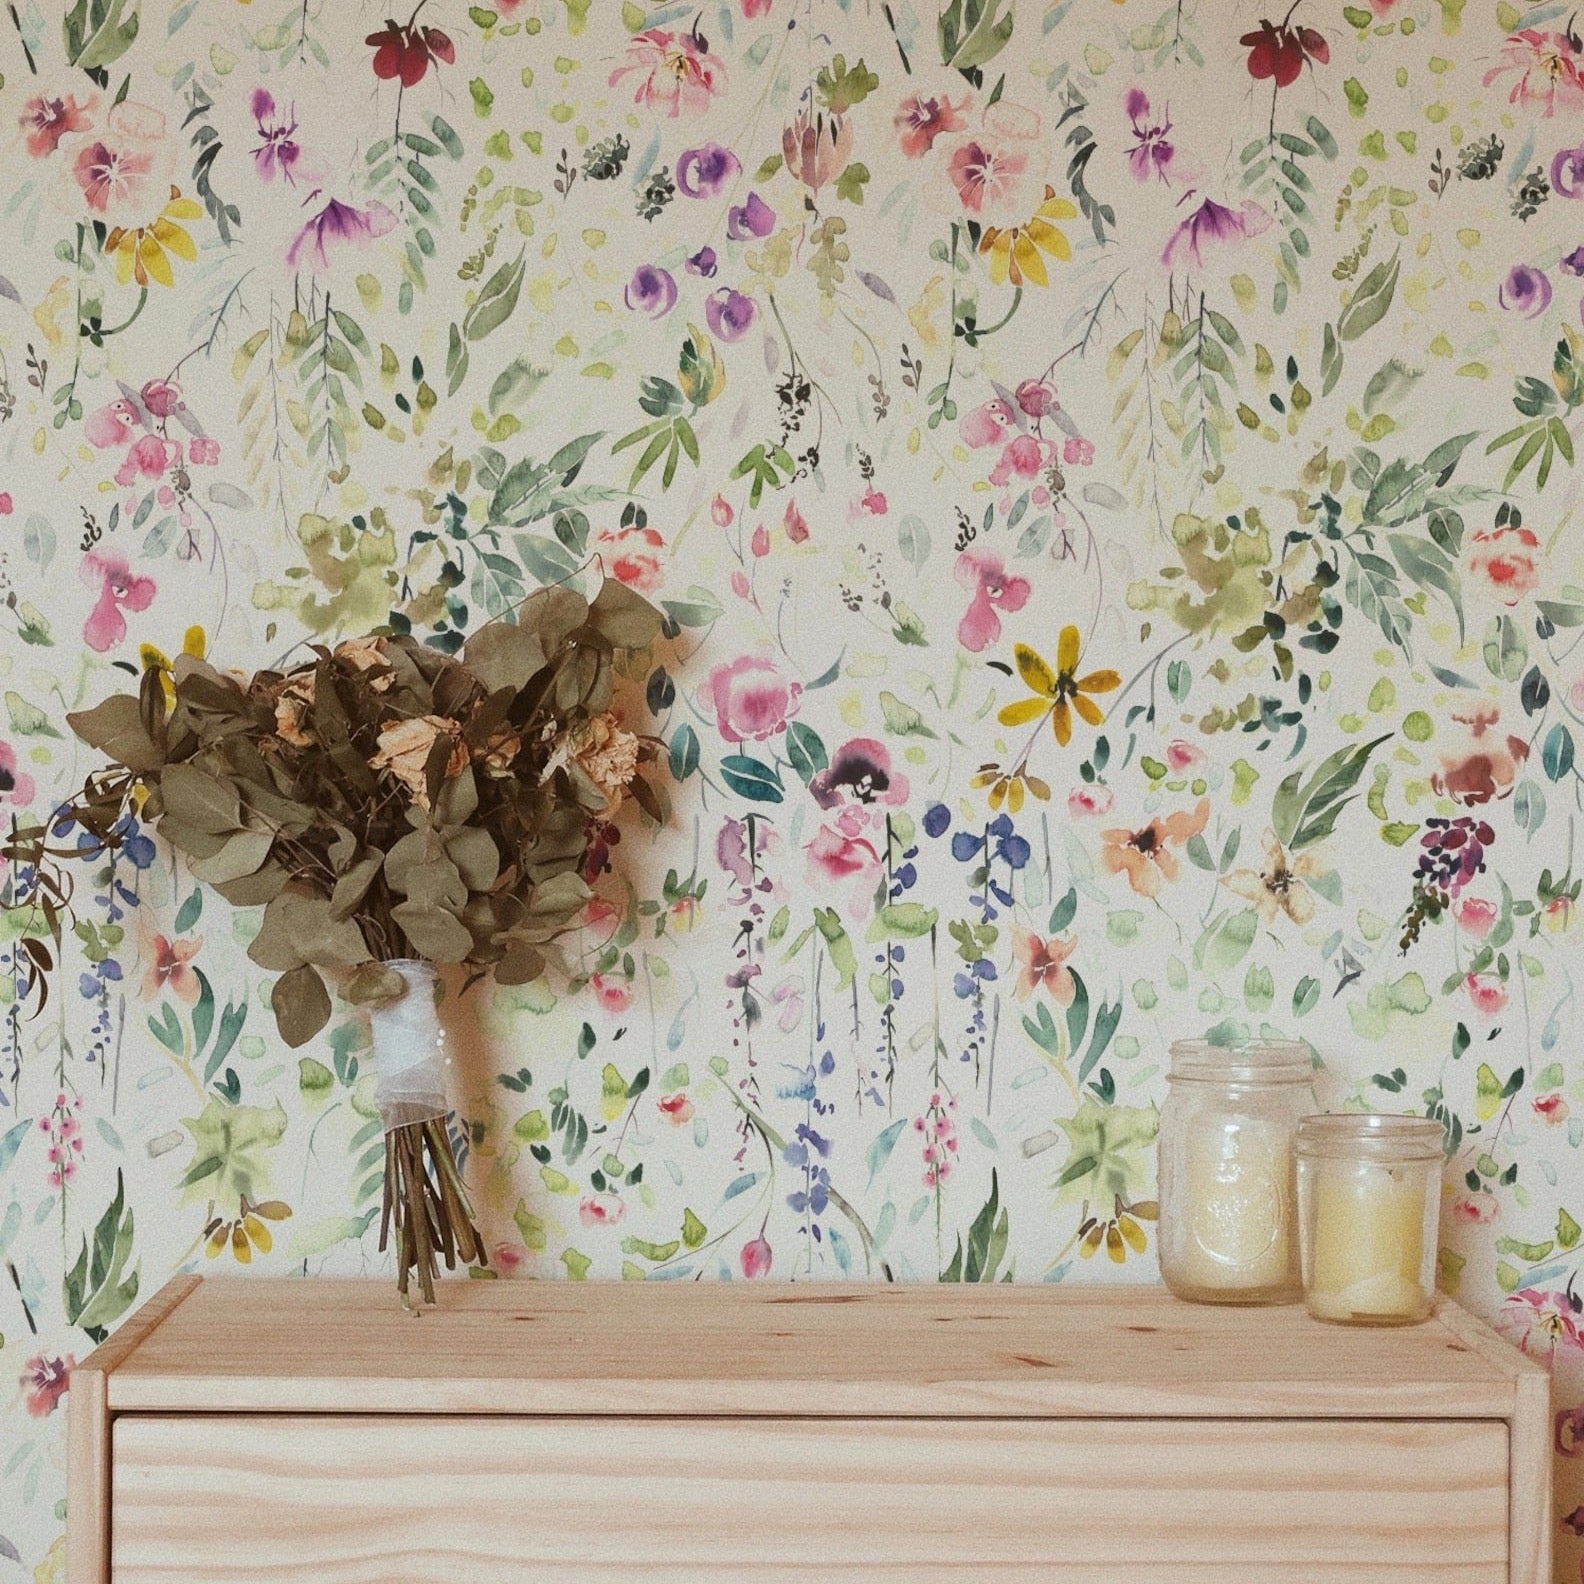 wallpaper, peel and stick wallpaper, Home decor, Floral wallpaper, Multicolor Floral Watercolor wallpaper, bedroom wallpaper, Multicolor wallpaper, 